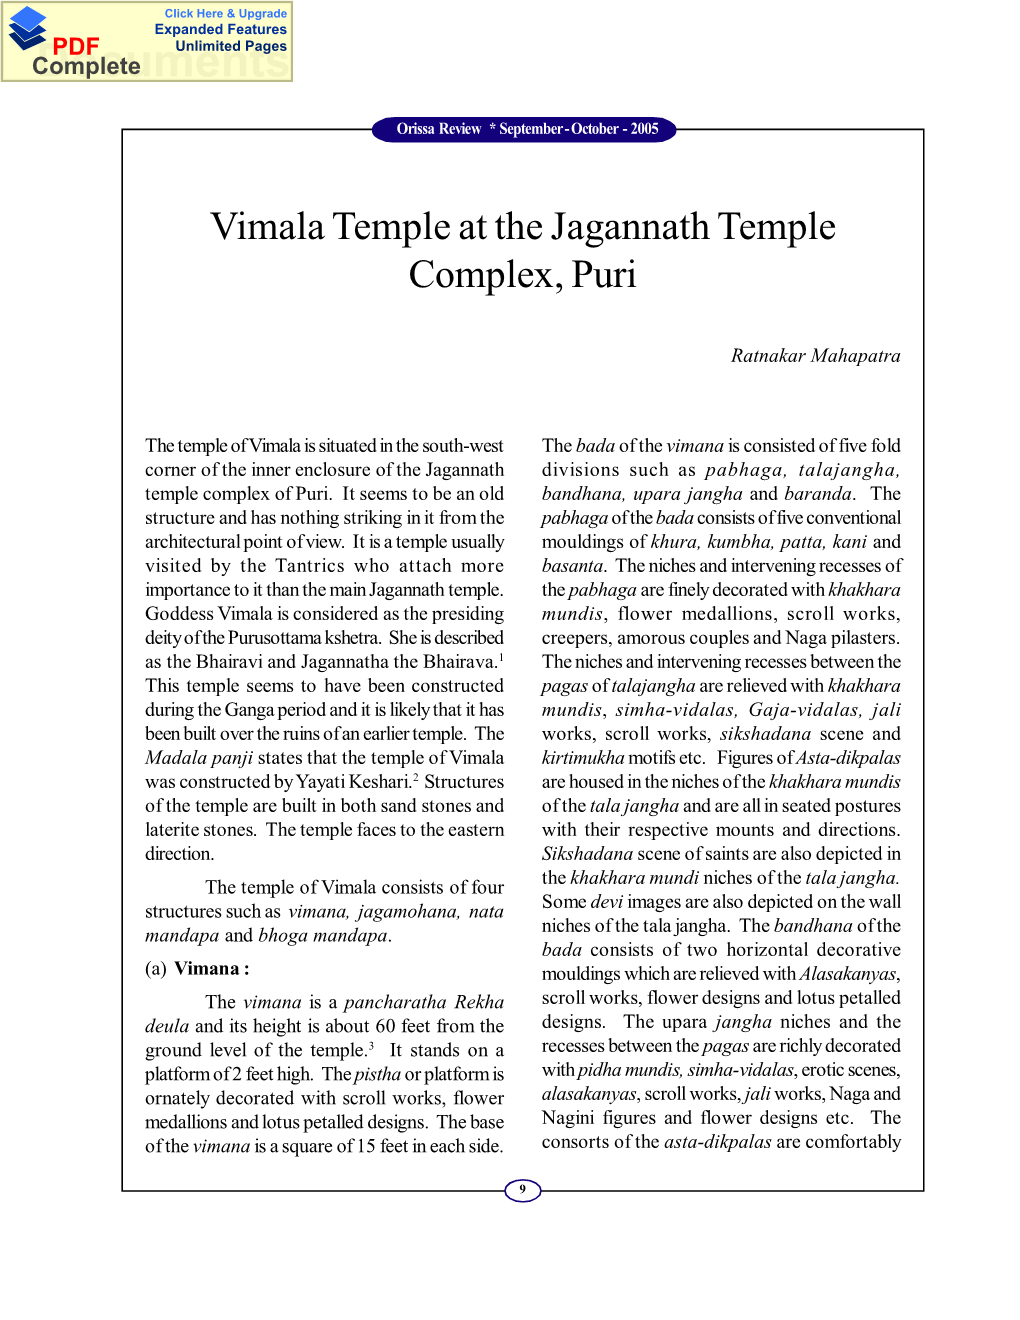 Vimala Temple at the Jagannath Temple Complex Puri